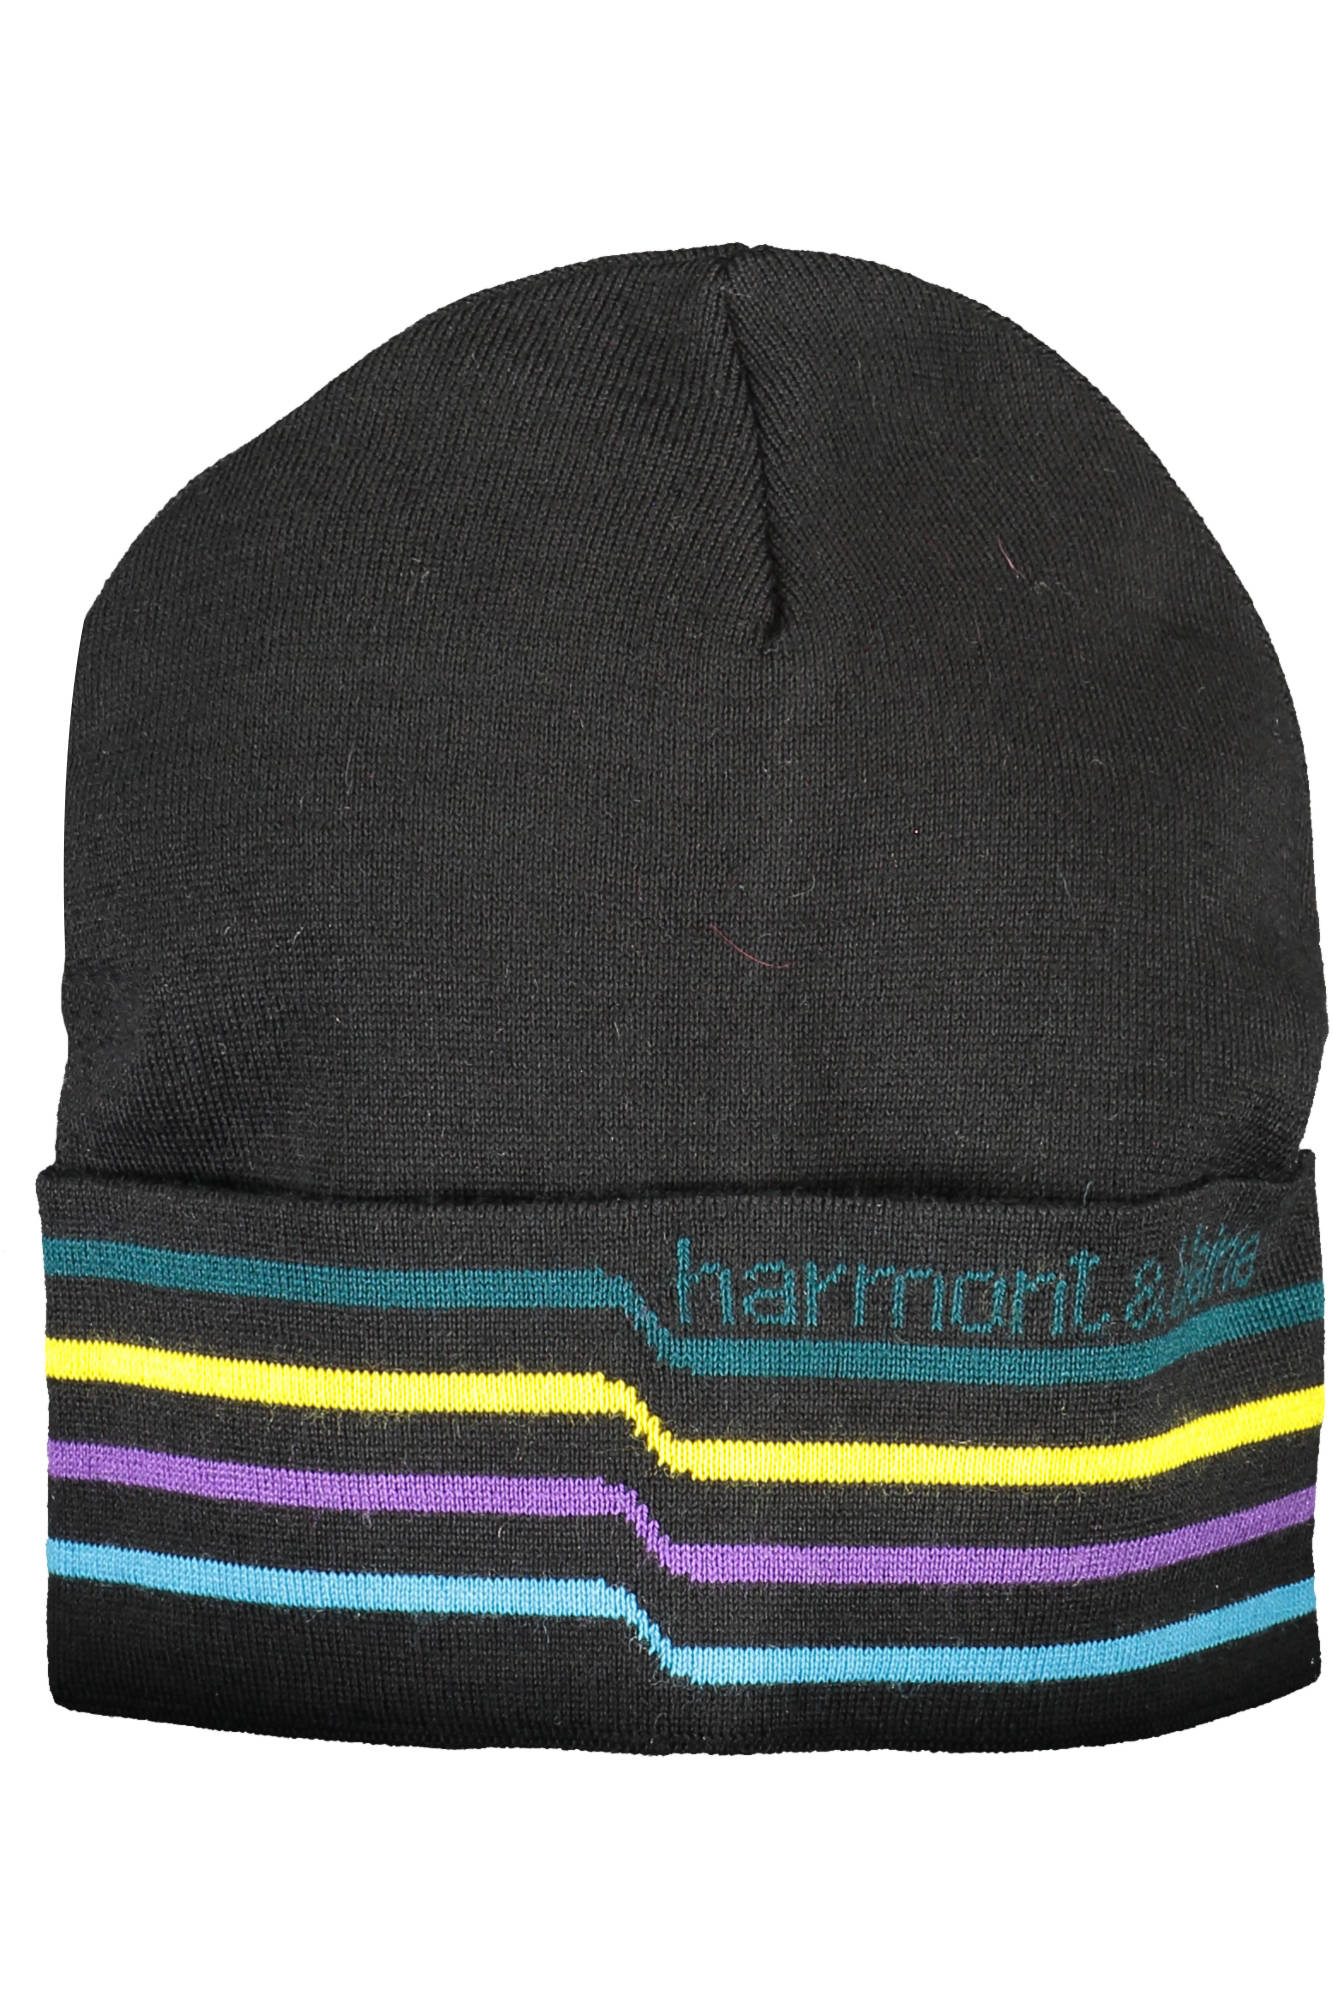 Harmont & Blaine Black Hats & Cap - Fizigo